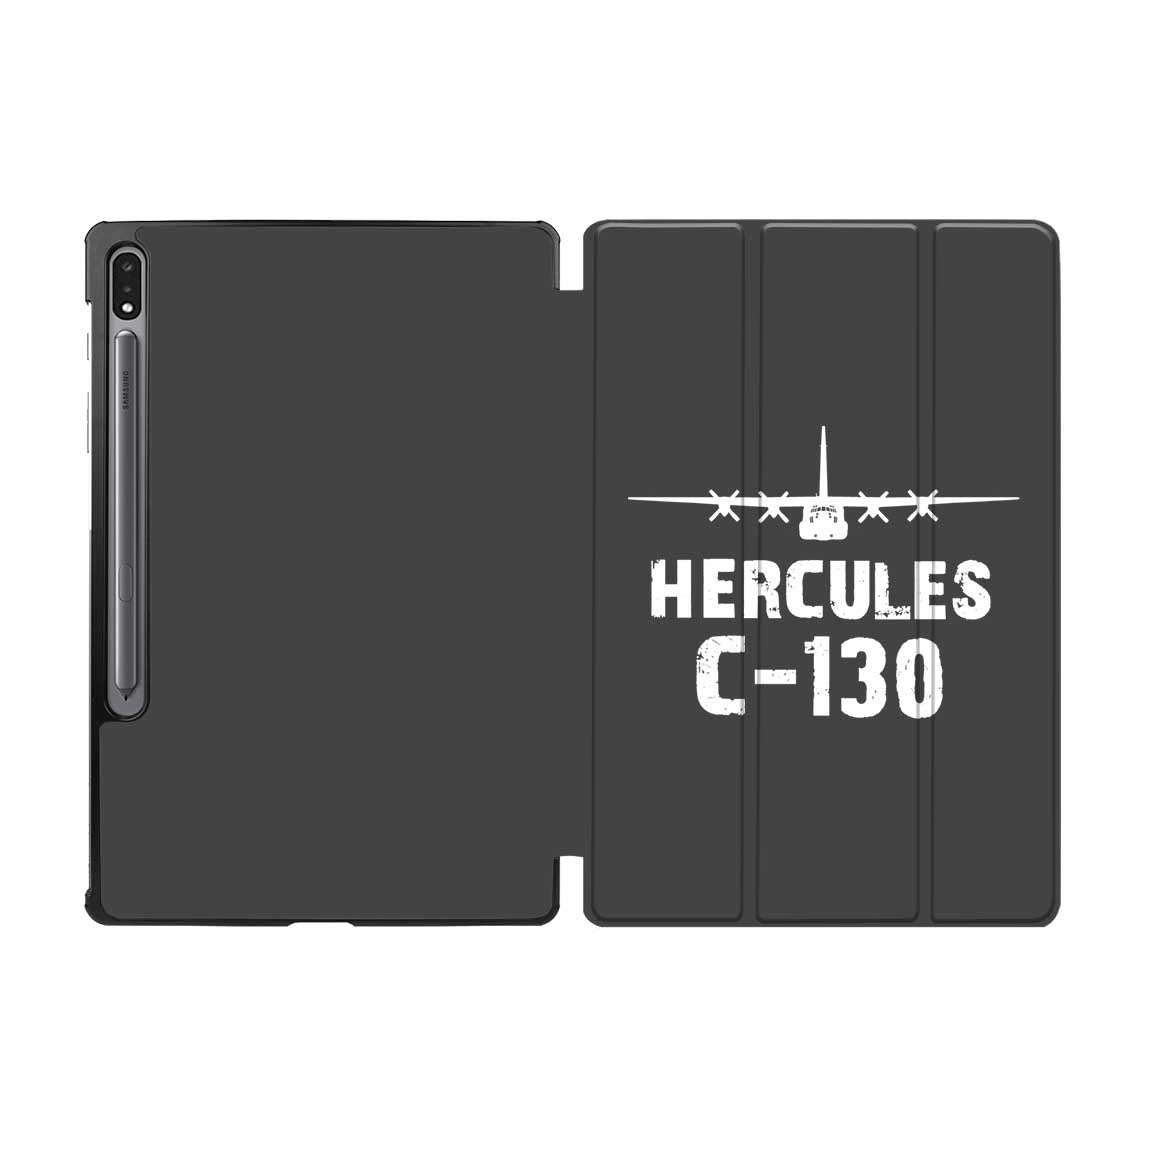 Hercules C-130 & Plane Designed Samsung Tablet Cases